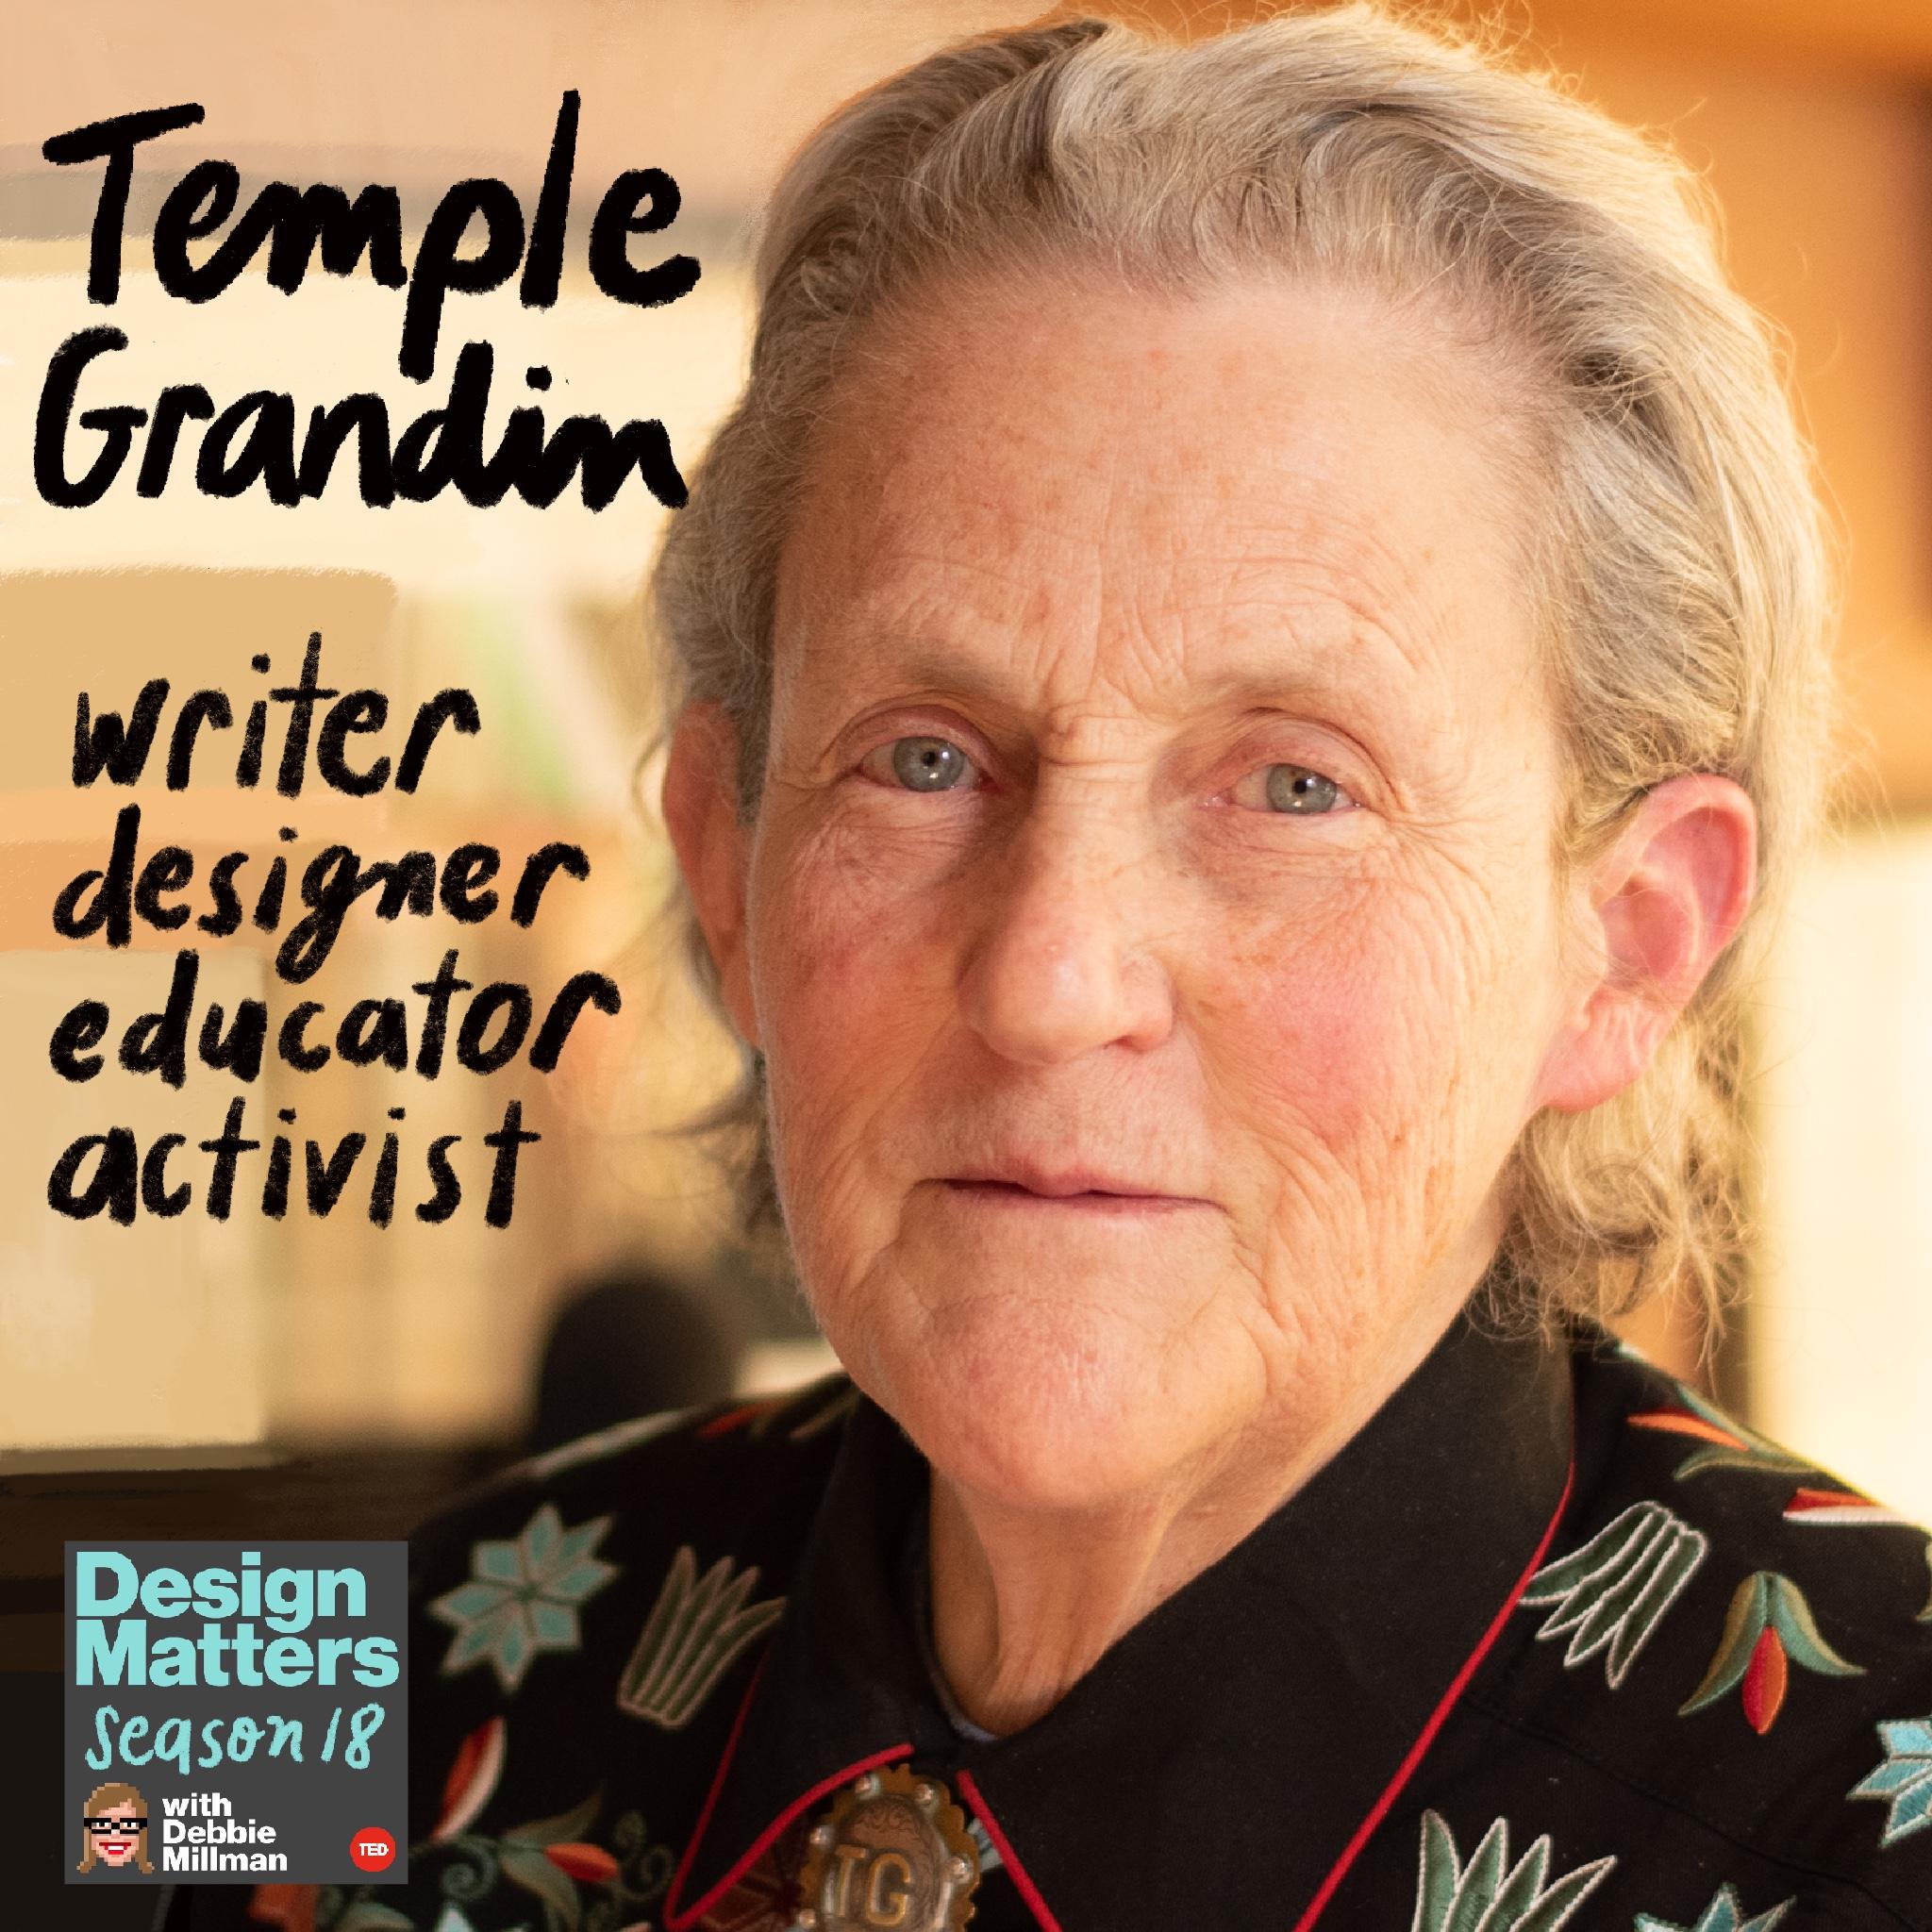 Thumbnail for "Dr. Temple Grandin".